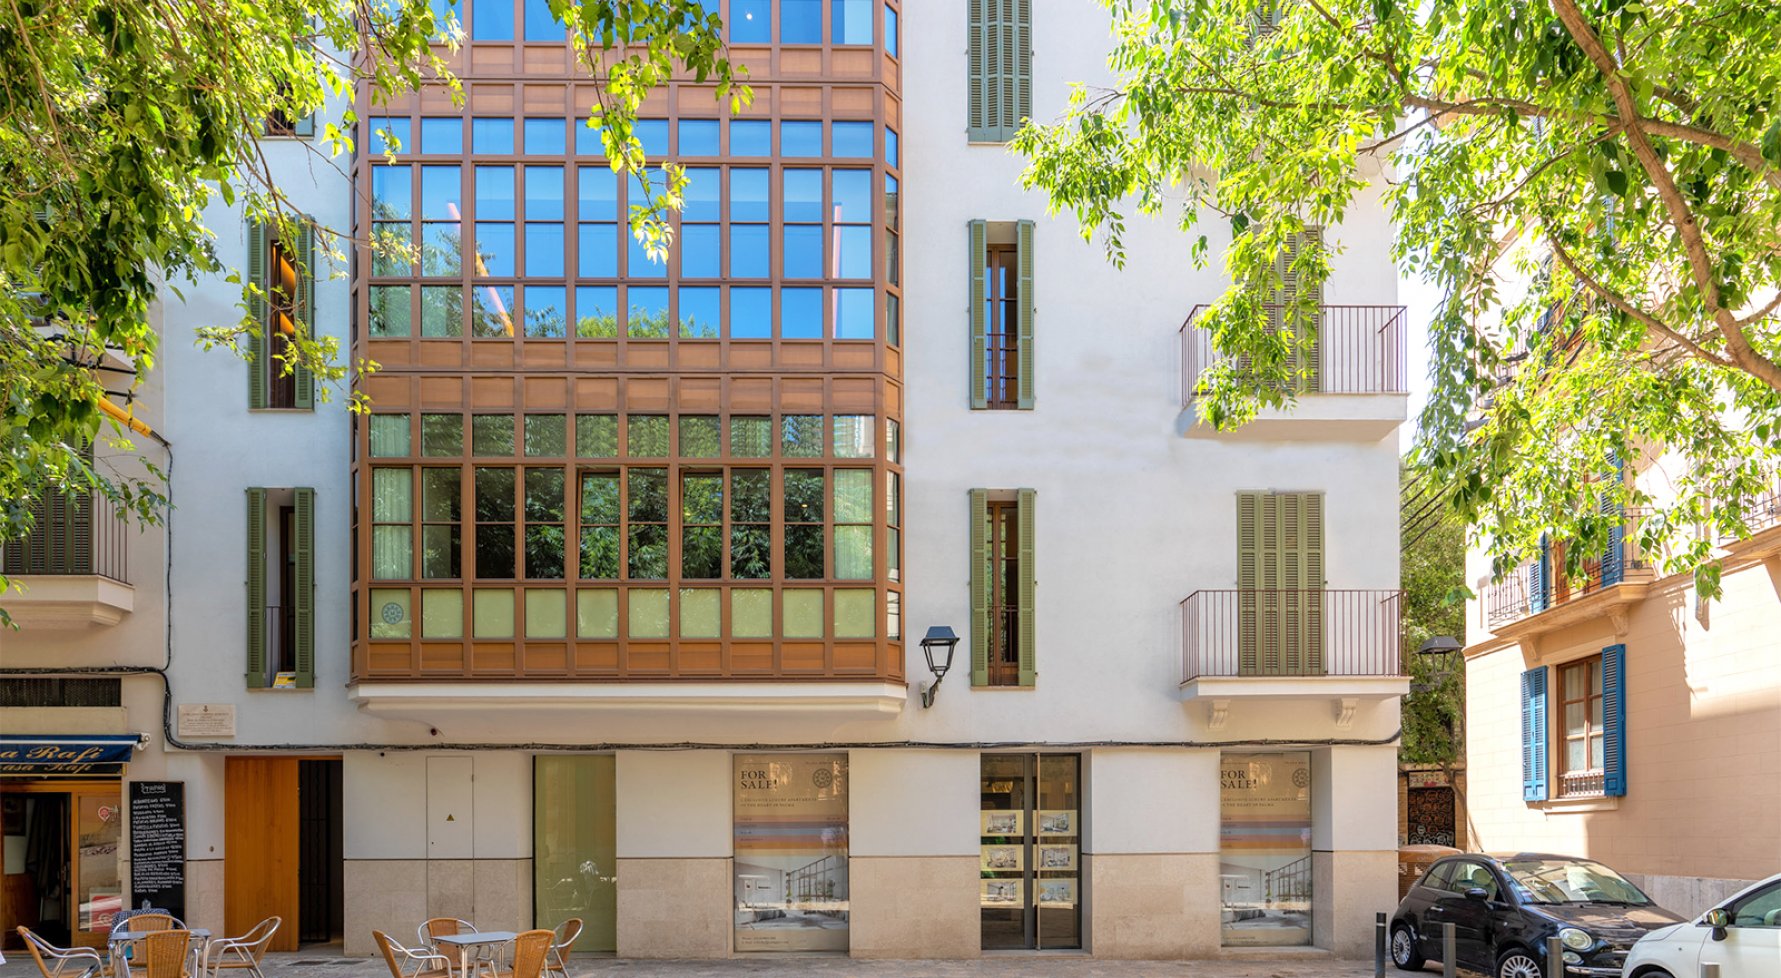 Immobilie in 07002 Spanien - Palma de Mallorca: Neubau mit Altstadtflair in Palma - bild 1